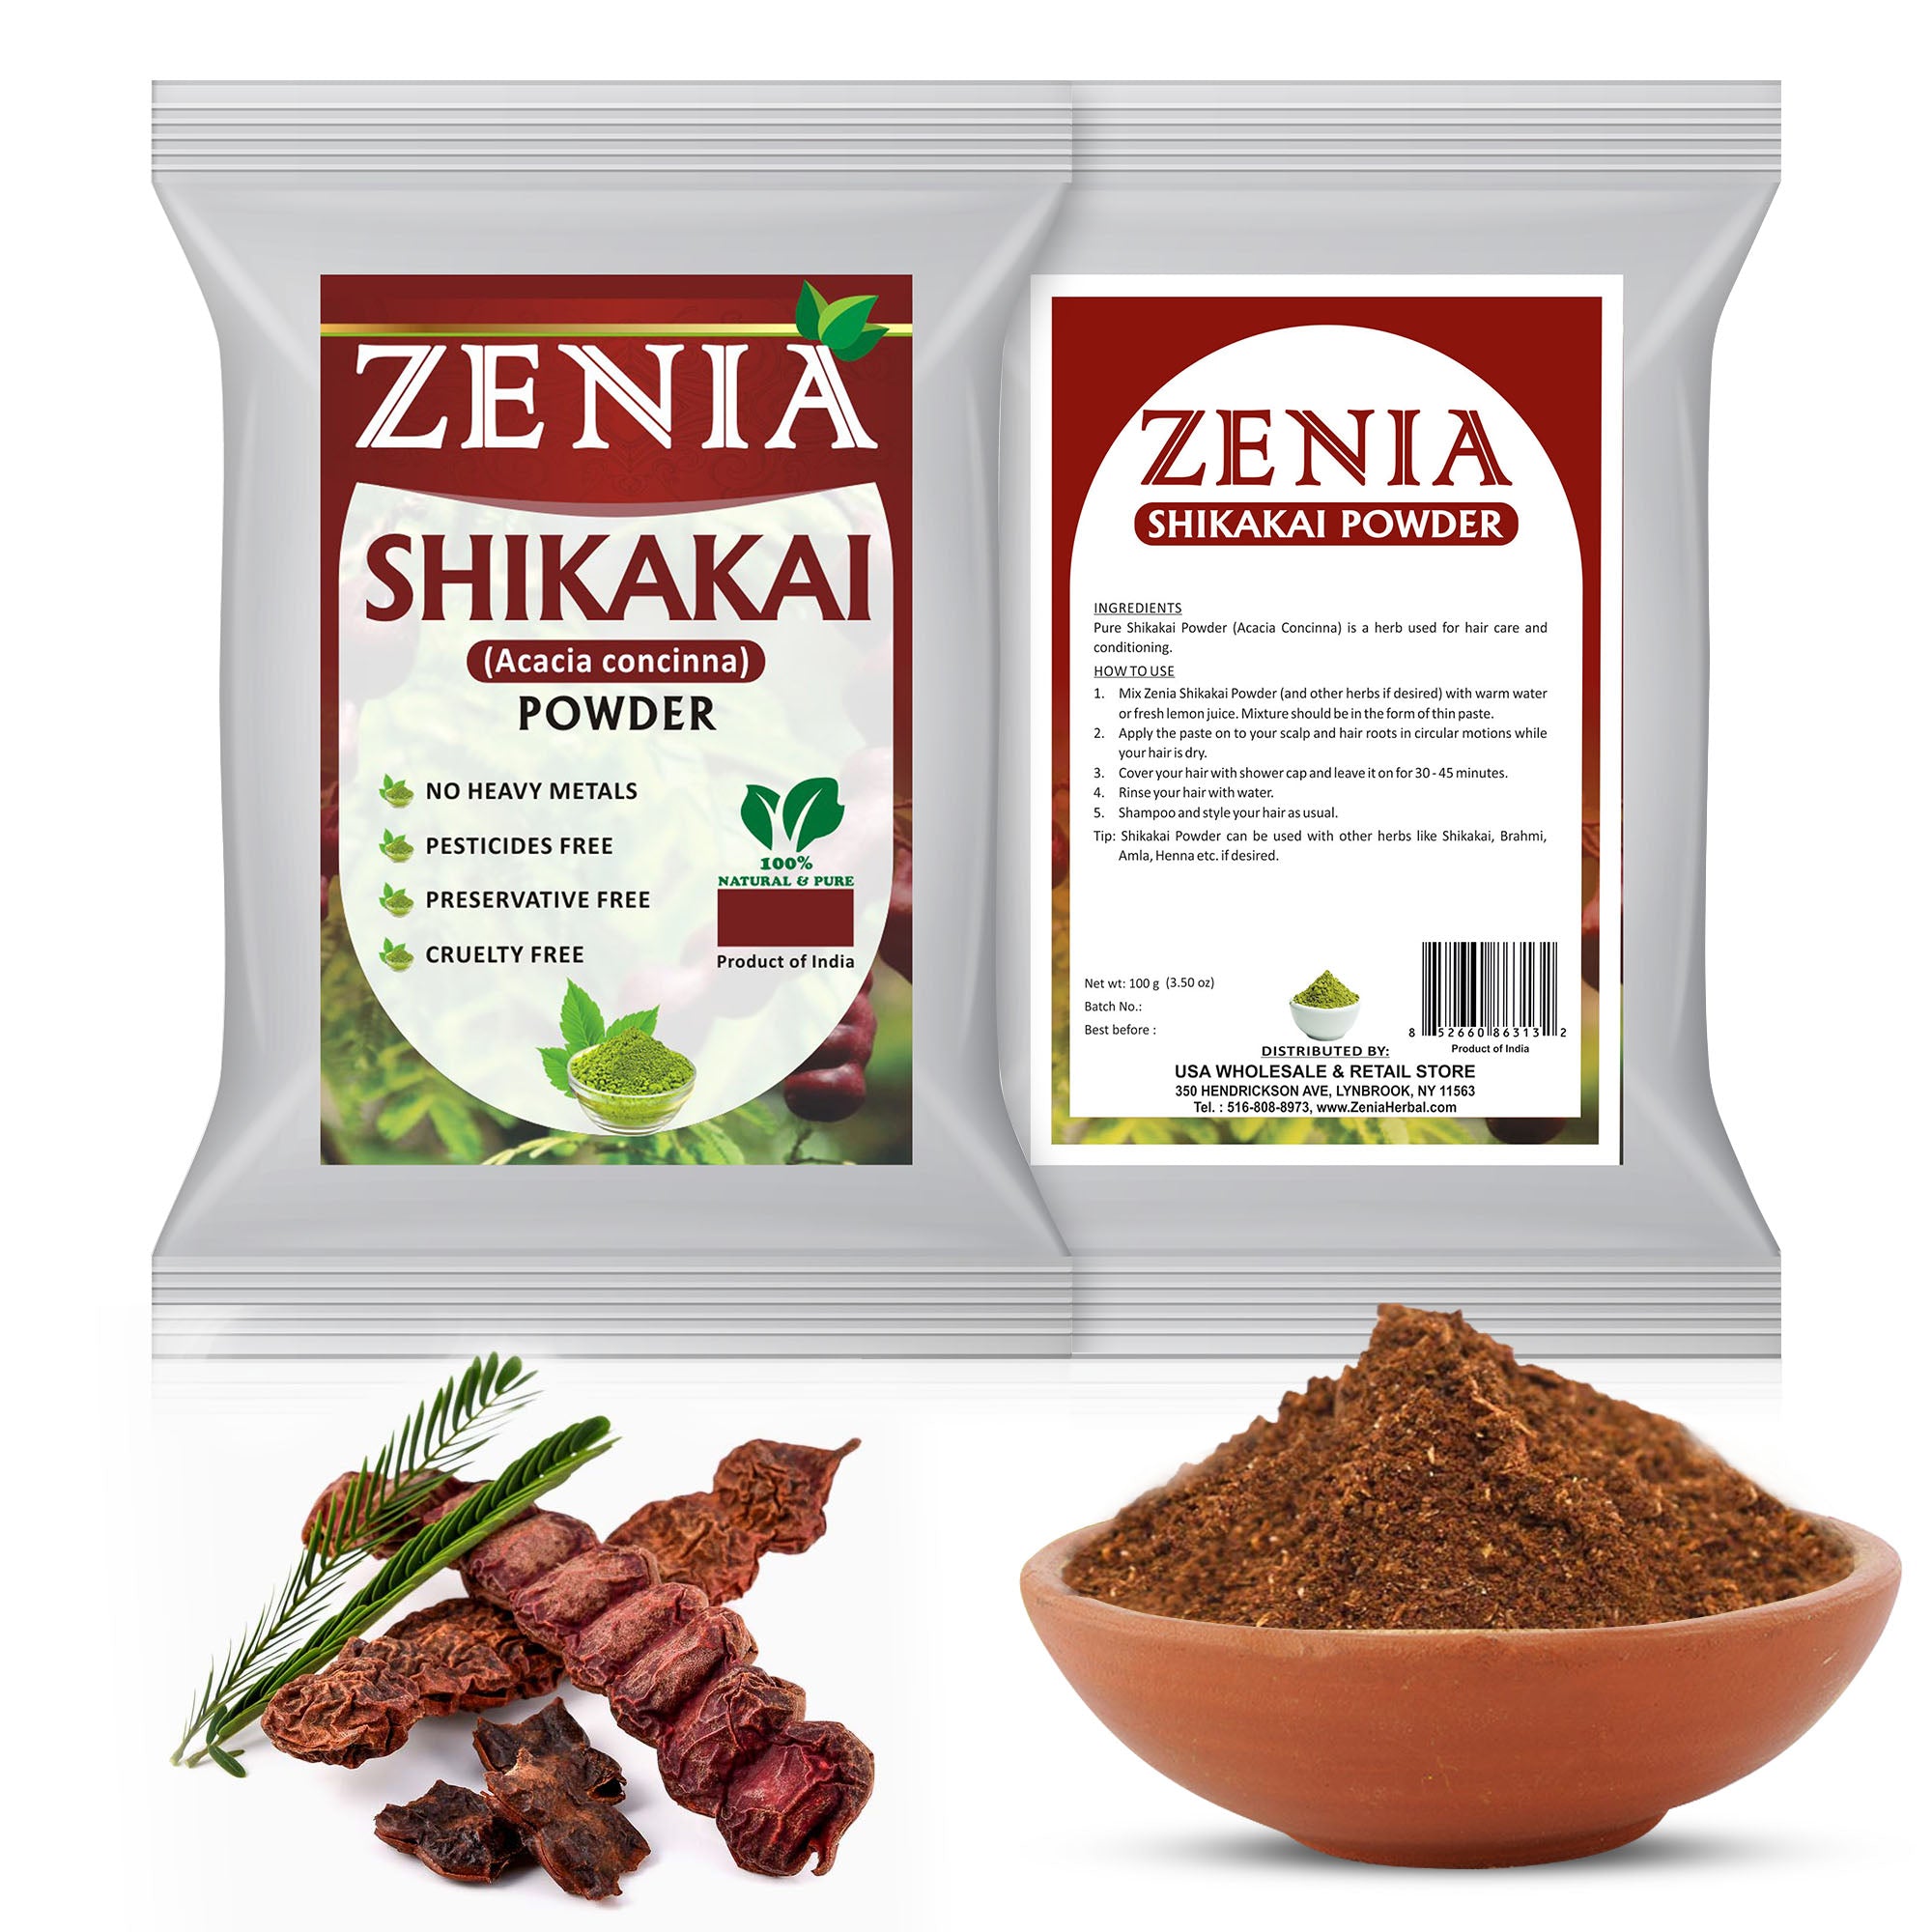 Zenia Herbal Hair Care Powders Combo Pack Amla Powder, Brahmi Powder, Shikakai Powder, Aritha Powder 100 Grams Each